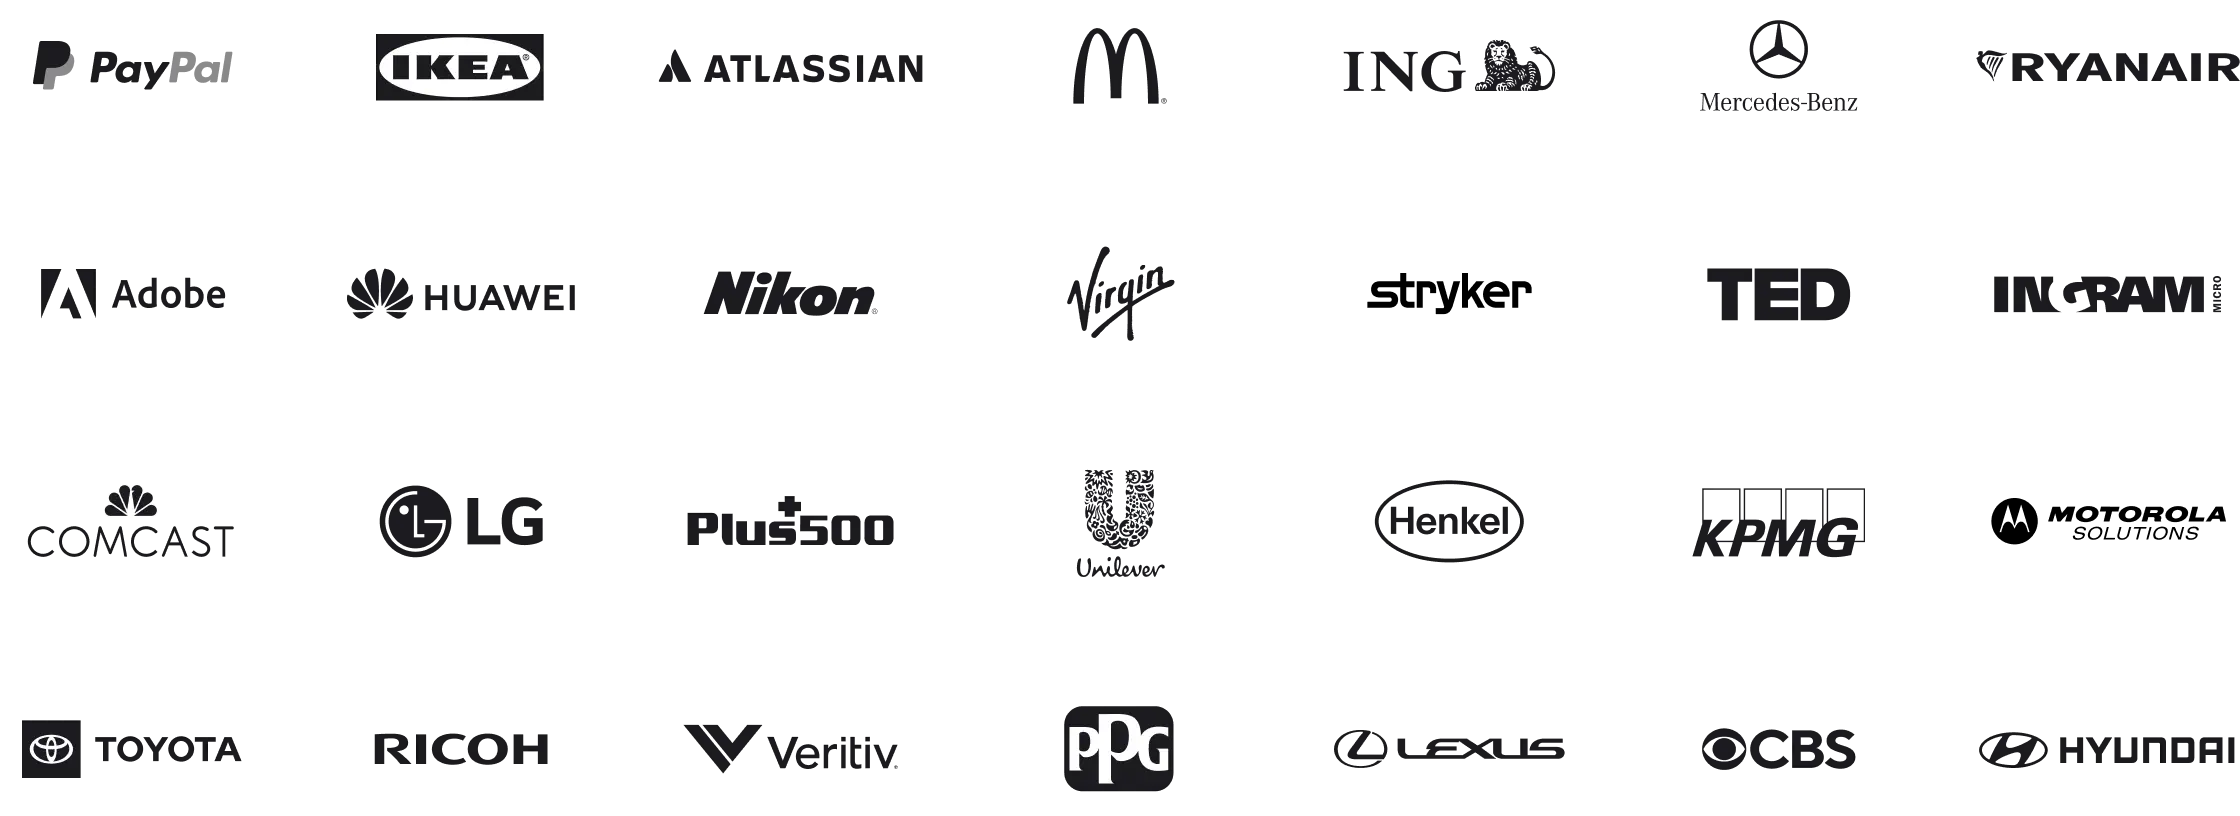 PayPal, Ikea, Atlassian, Mc. Donald's, ING, Mercedes-Benz, Ryanair, Adobe, Huawei, Nikon, Virgin, Stryker, Ingram, TED, Comcast, LG, Plus500, Unilever, Henkel, KPMG, Motorola Solutions, Toyota, Ricoh, Vertiv, PPG, Lexus, CBS, Hyundai